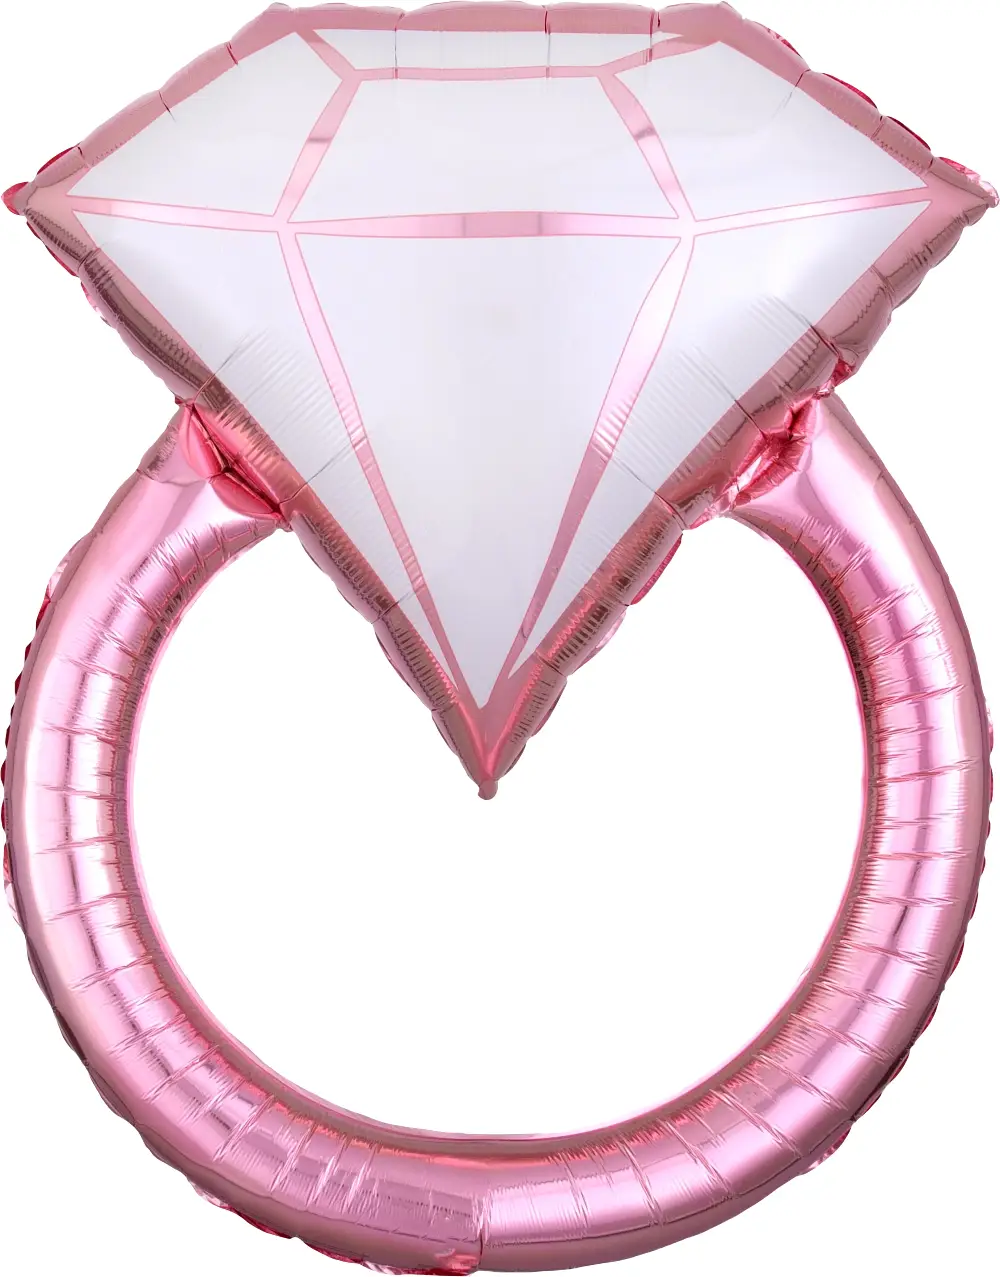 Pink ring shape  balloon